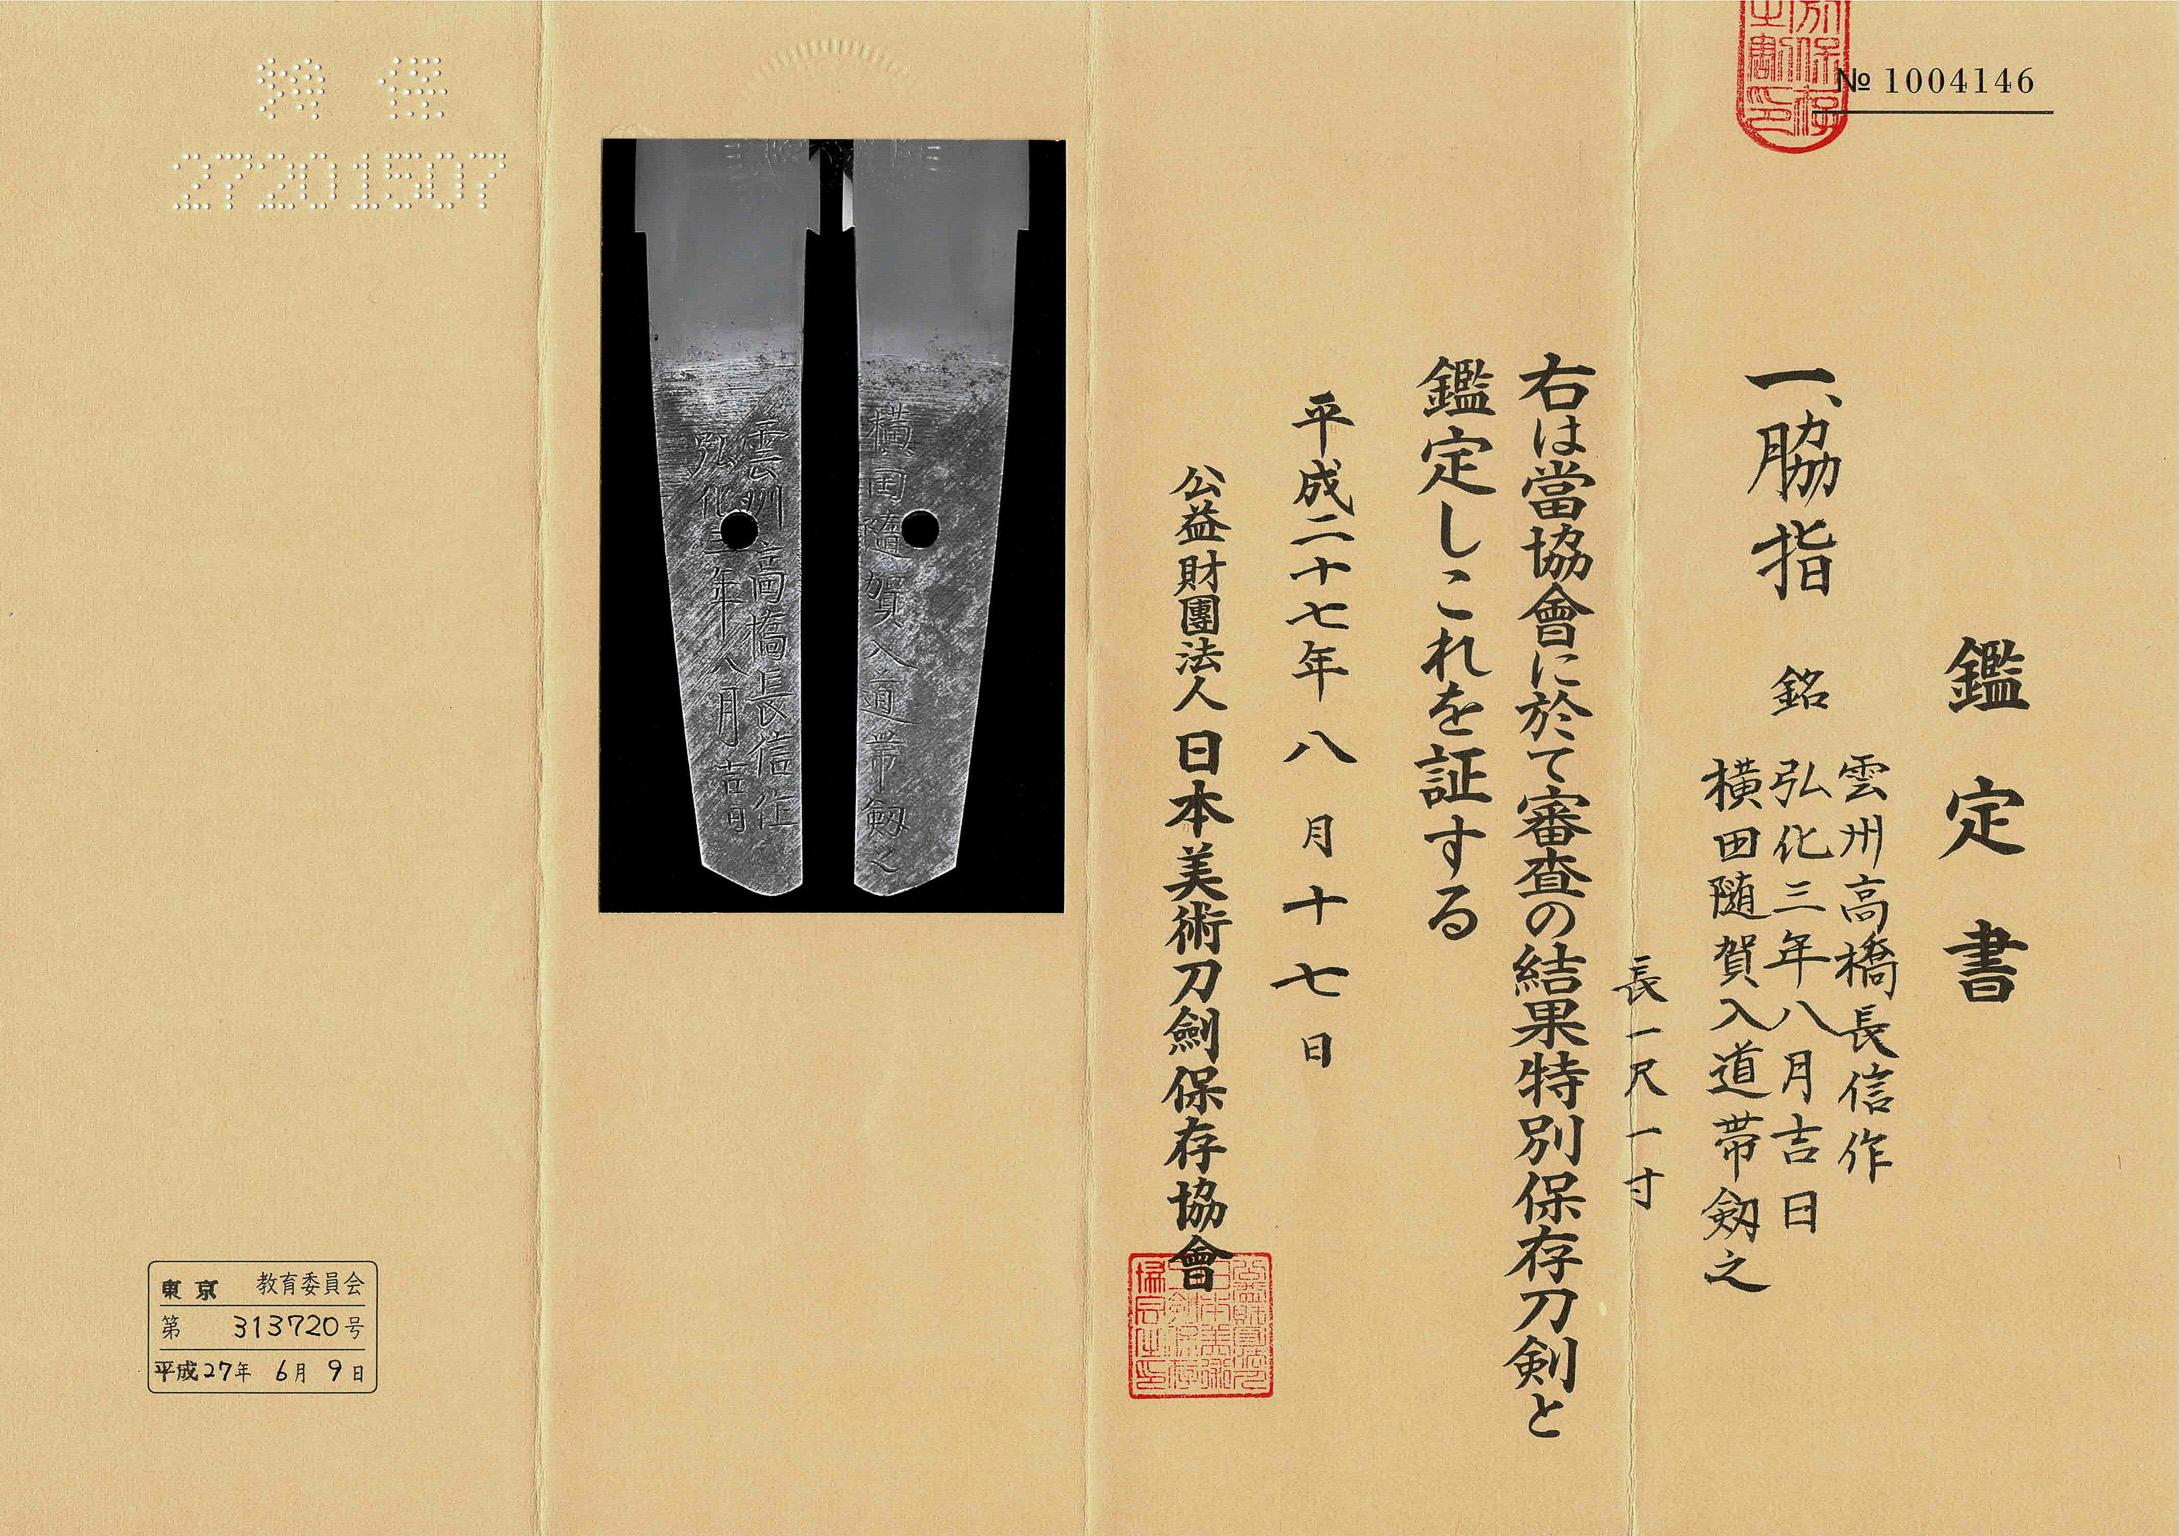 Ein Shinto Sunnobi Tanto
von Takahashi Naganobu, 1846

Unsho Takahashi Naganobu / Ein Glückstag im August Koka san-nen (1846)
Yokota wurde mit diesem Schwert Mönch
-
NBTHK Tokubetsu-Hozon-Marke
-
Veröffentlicht: Yoshihiro Abe, Unsho Tosho Takahashi